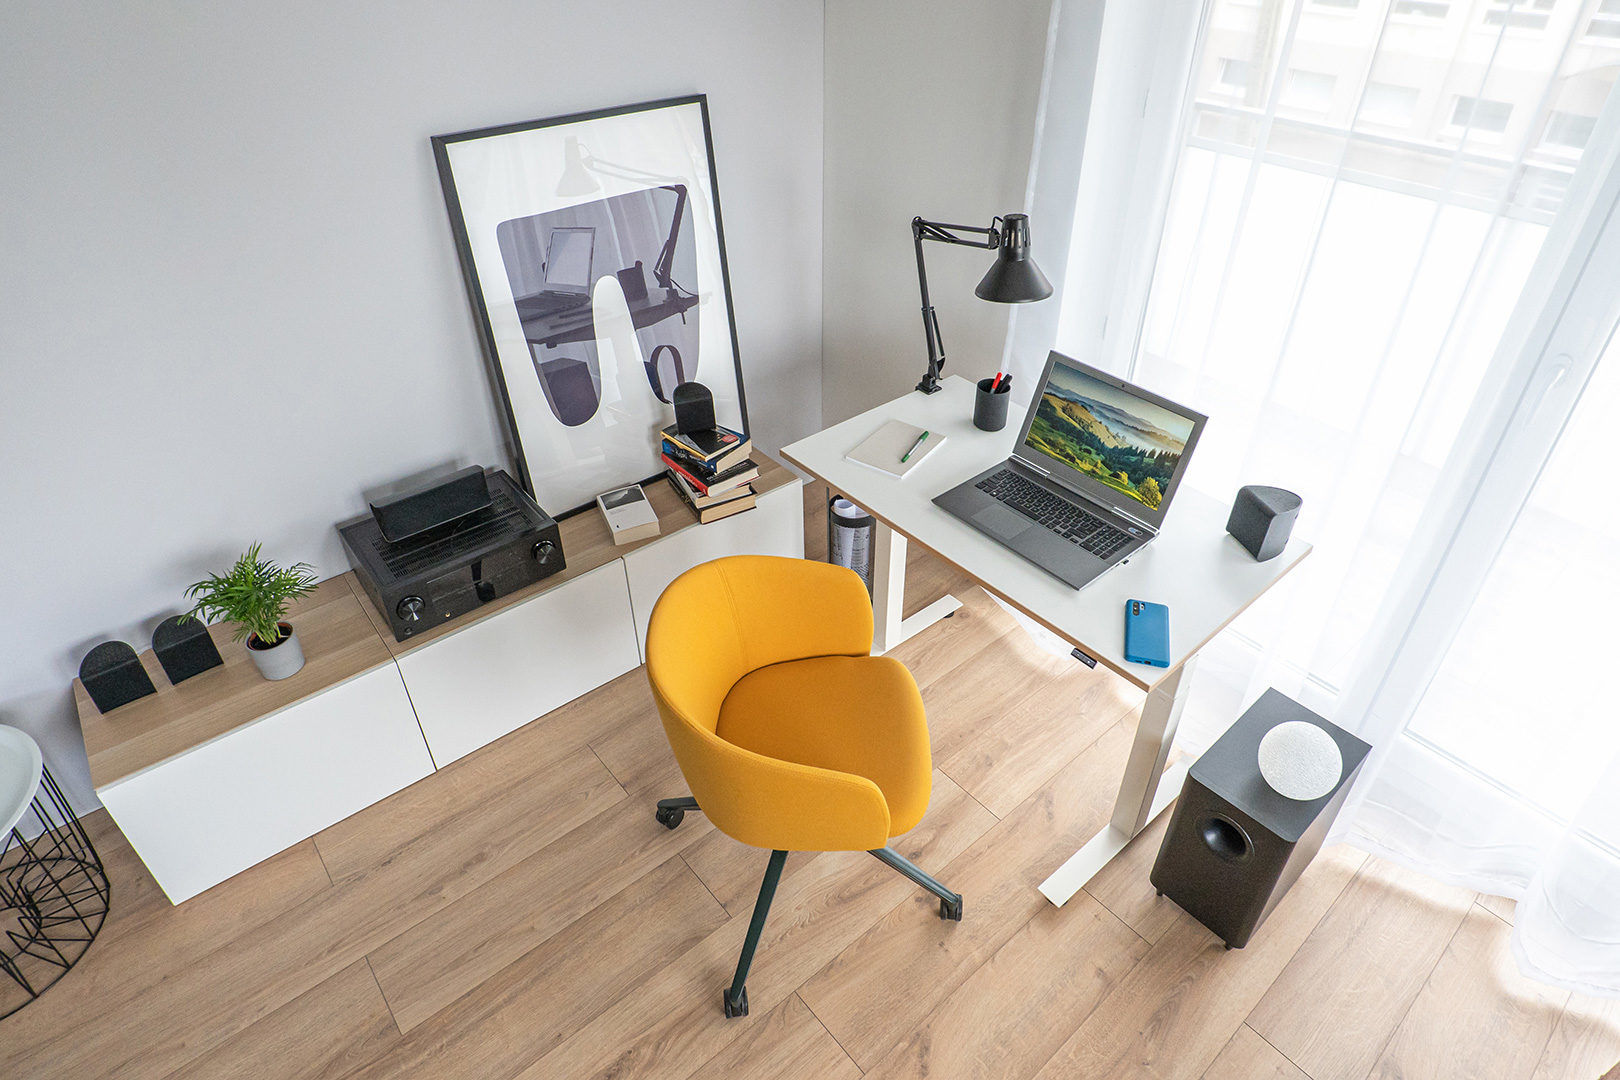 MDD - Compact Drive - biurko do pracy w domu